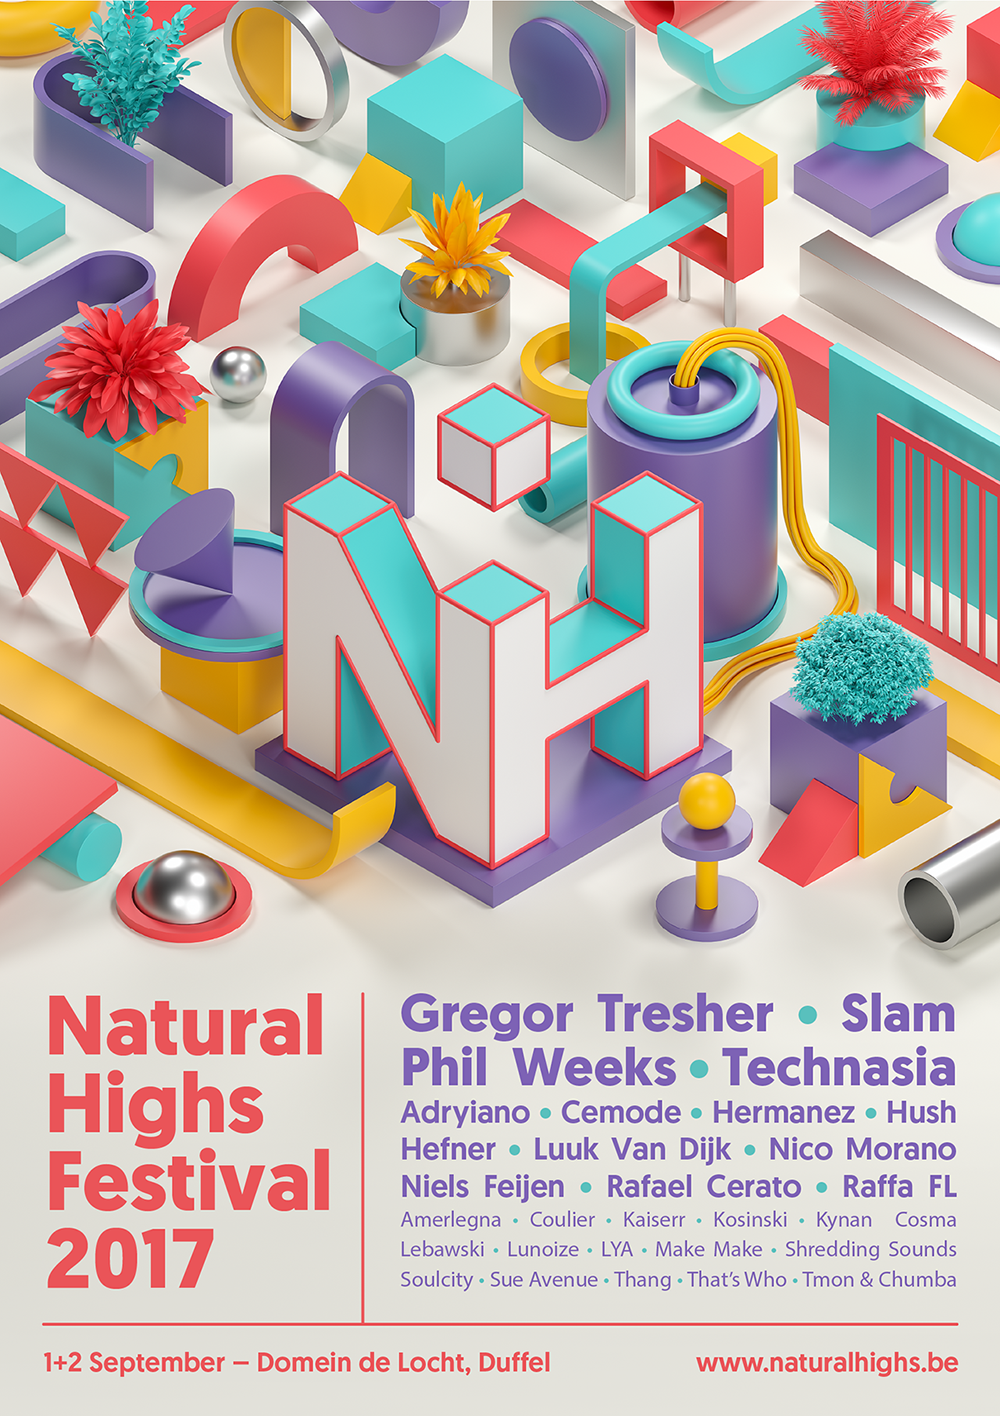 Serafim Mendes – Graphic Design & 3D - Natural Highs Festival